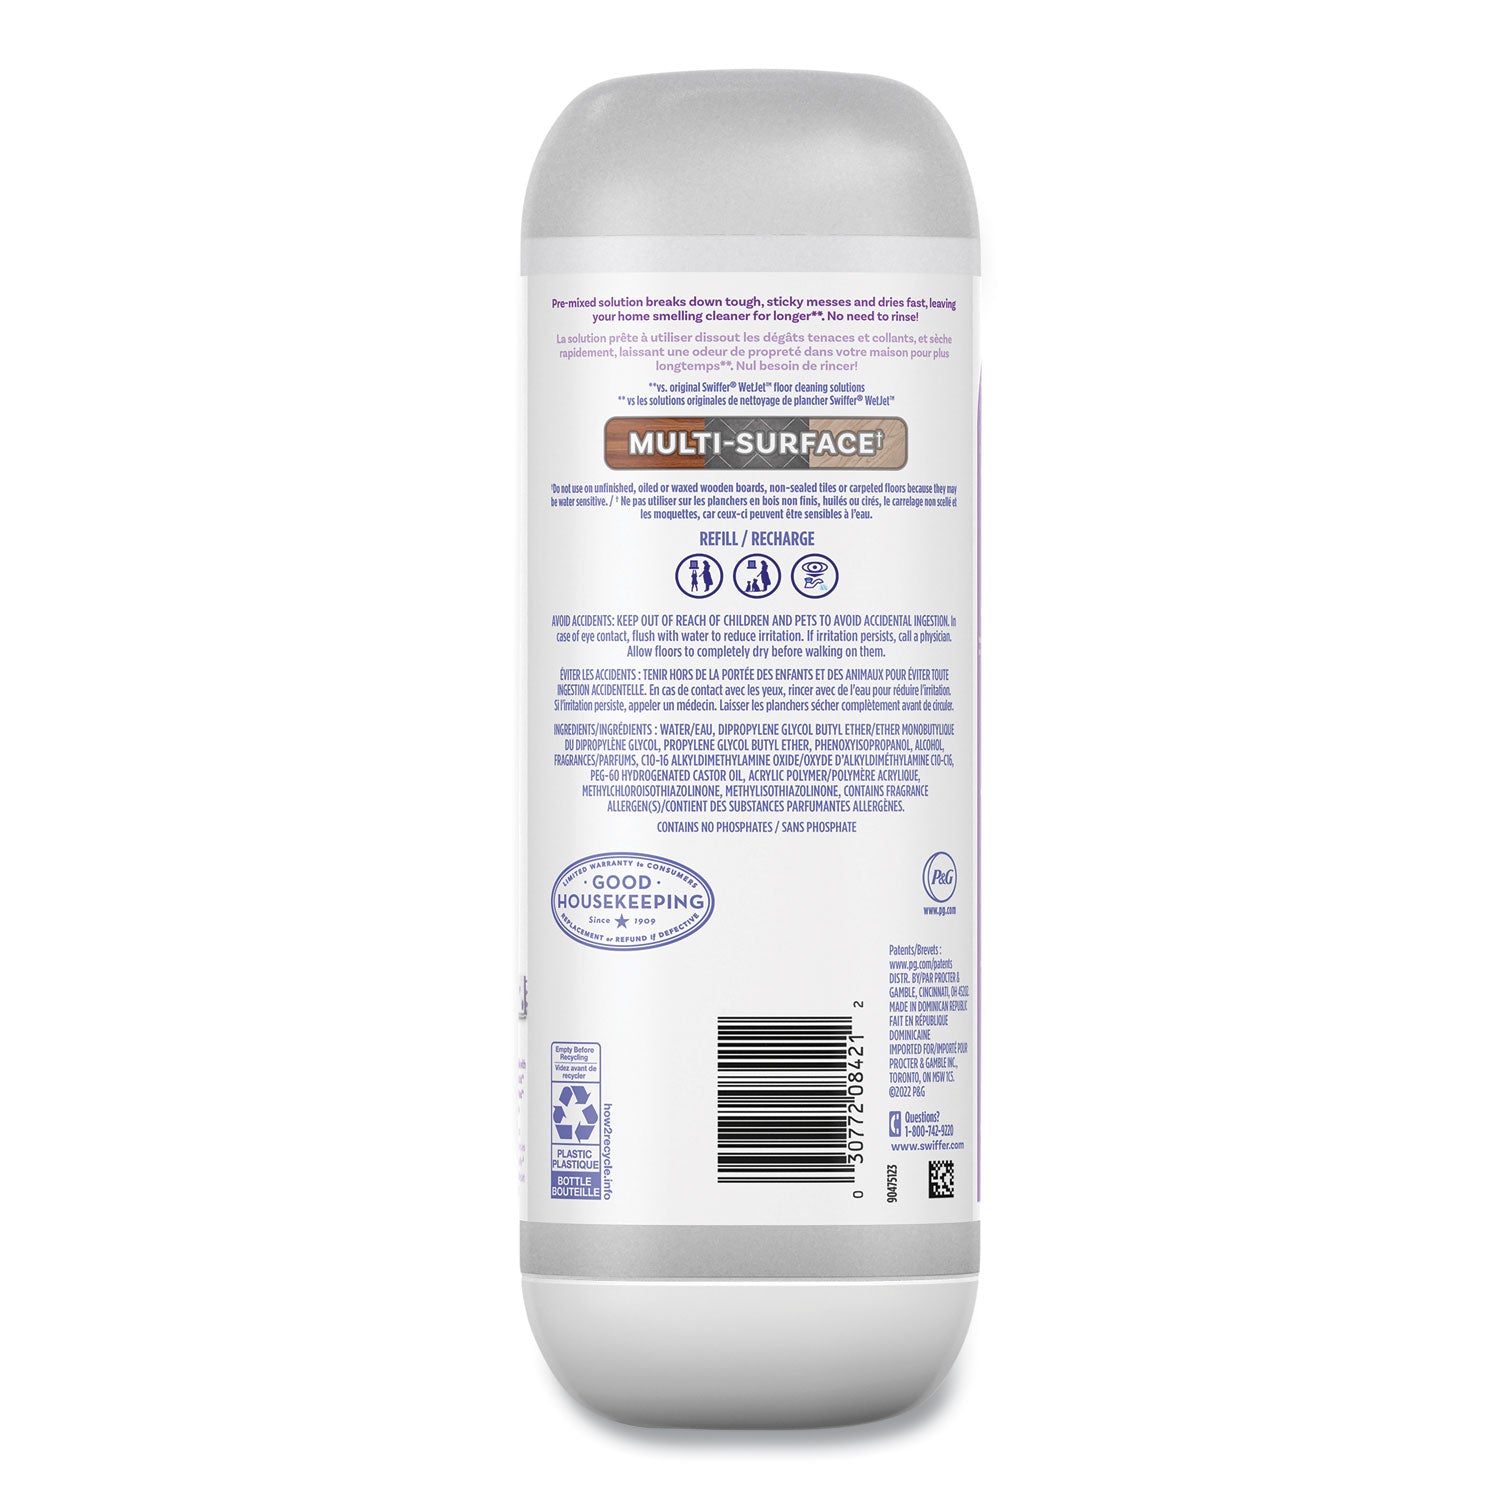 powermop-refill-cleaning-solution-lavender-scent-253-oz-refill-bottle-6-carton_pgc08421 - 5